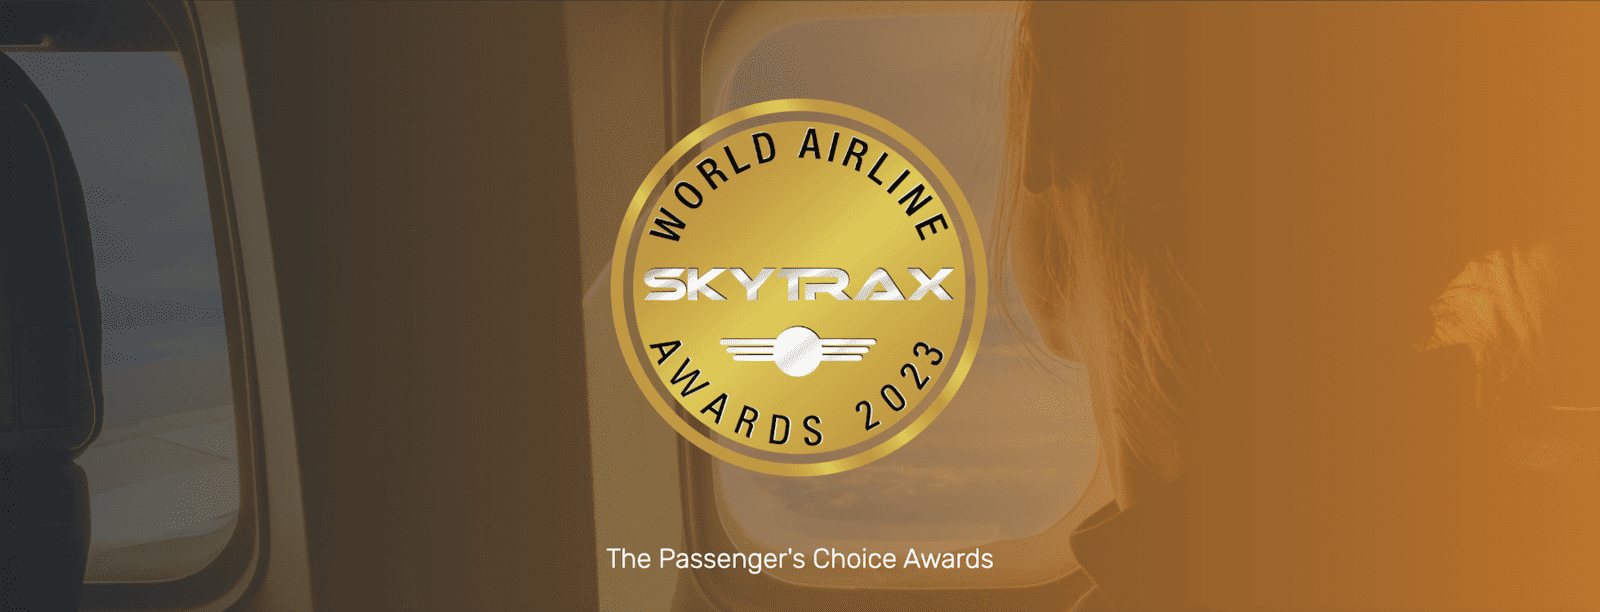 Skytrax Awards featured